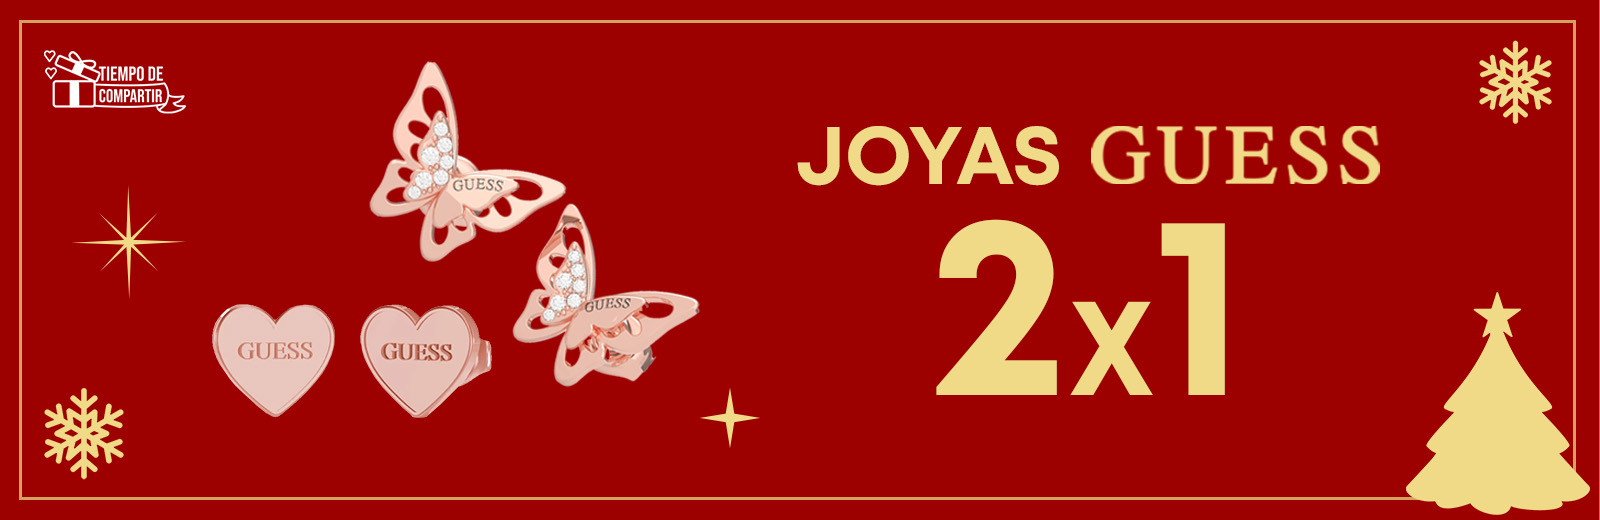 2x1 JOYAS GUESS